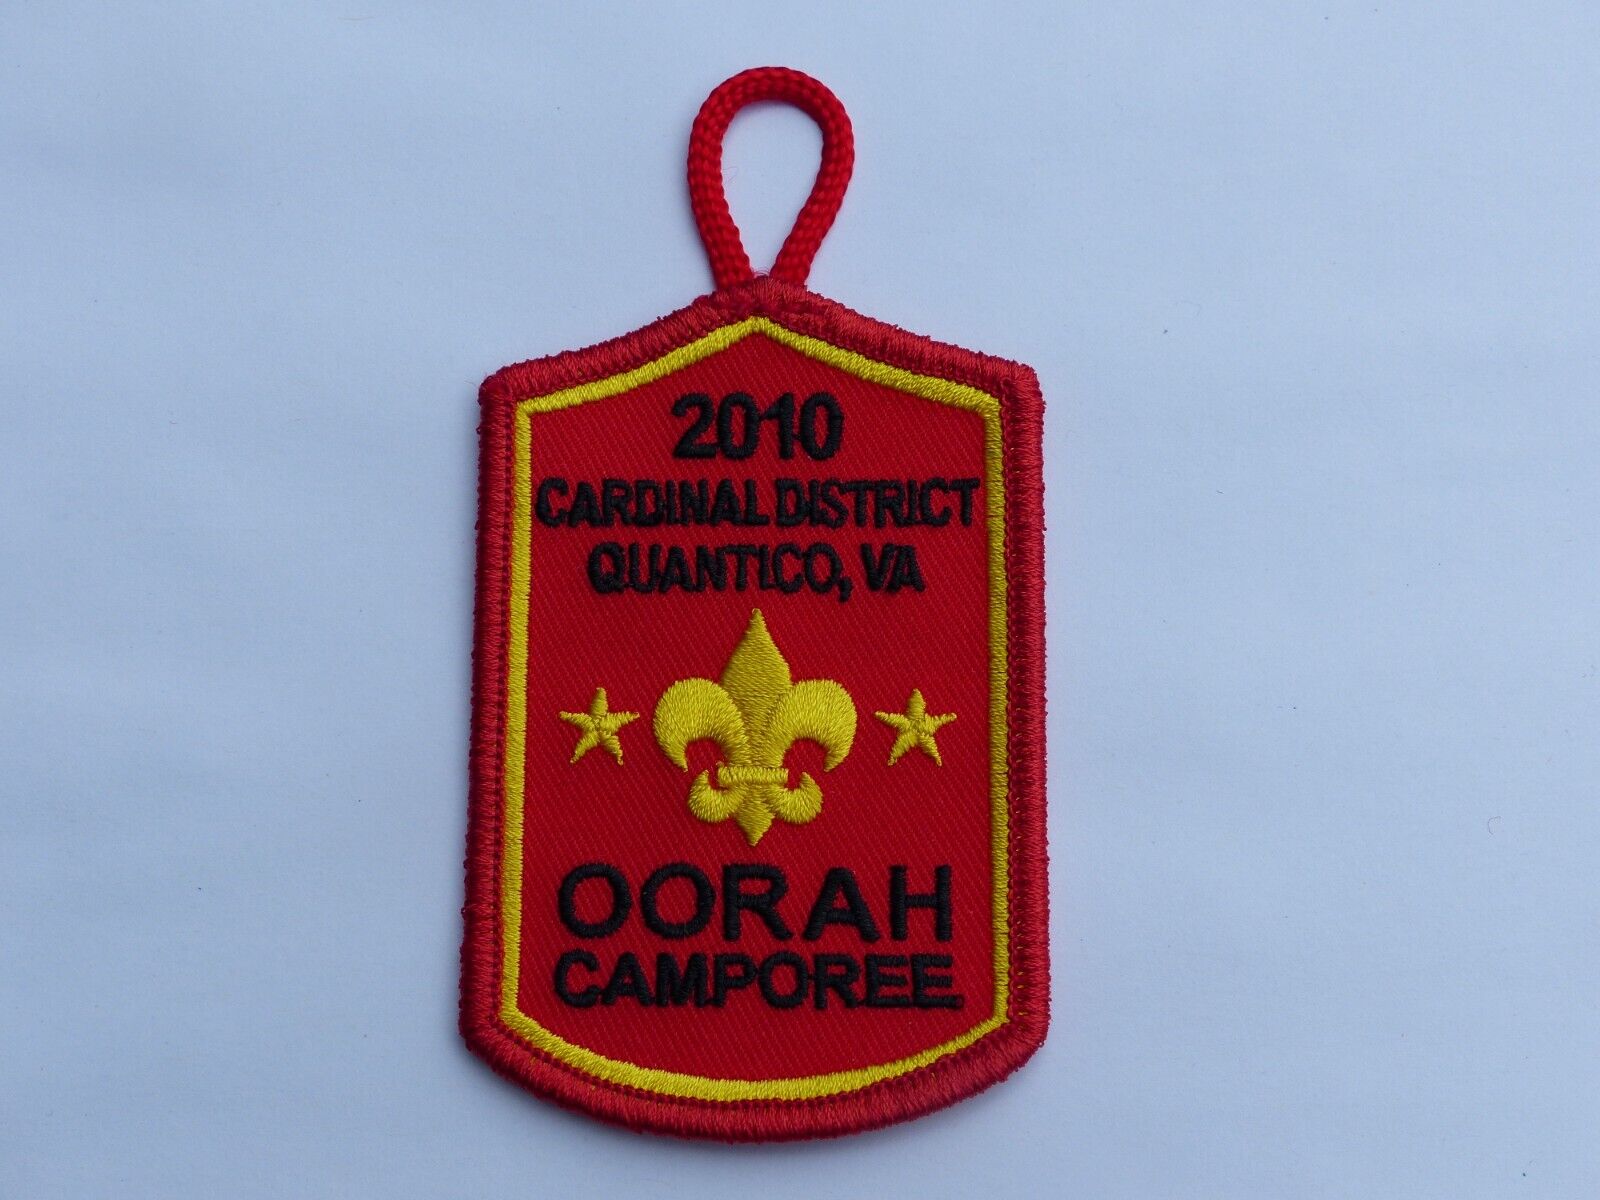 Unused 2010 OORAH Camporee Quantico Heart of Virginia Council Boy Scout BS Patch